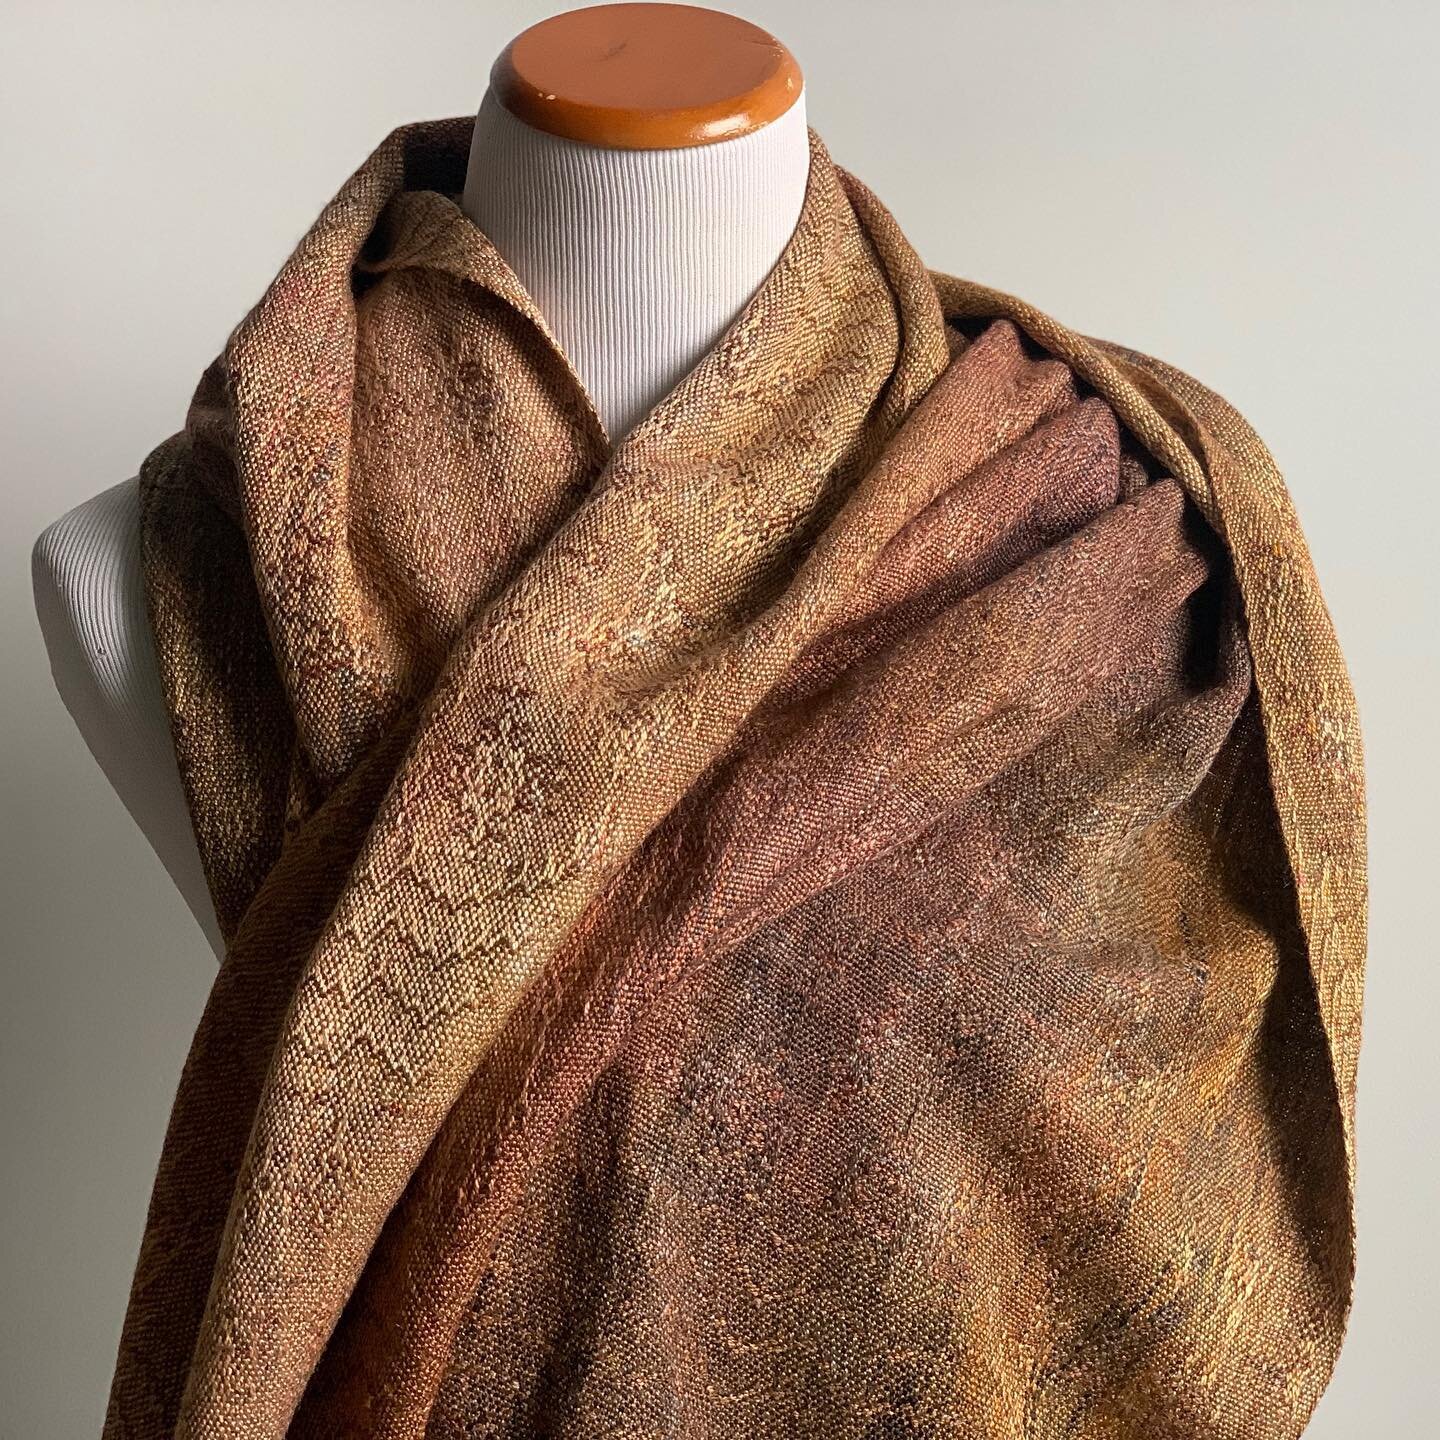 A custom 100% silk shawl from the Serein warp off the loom today 🌞